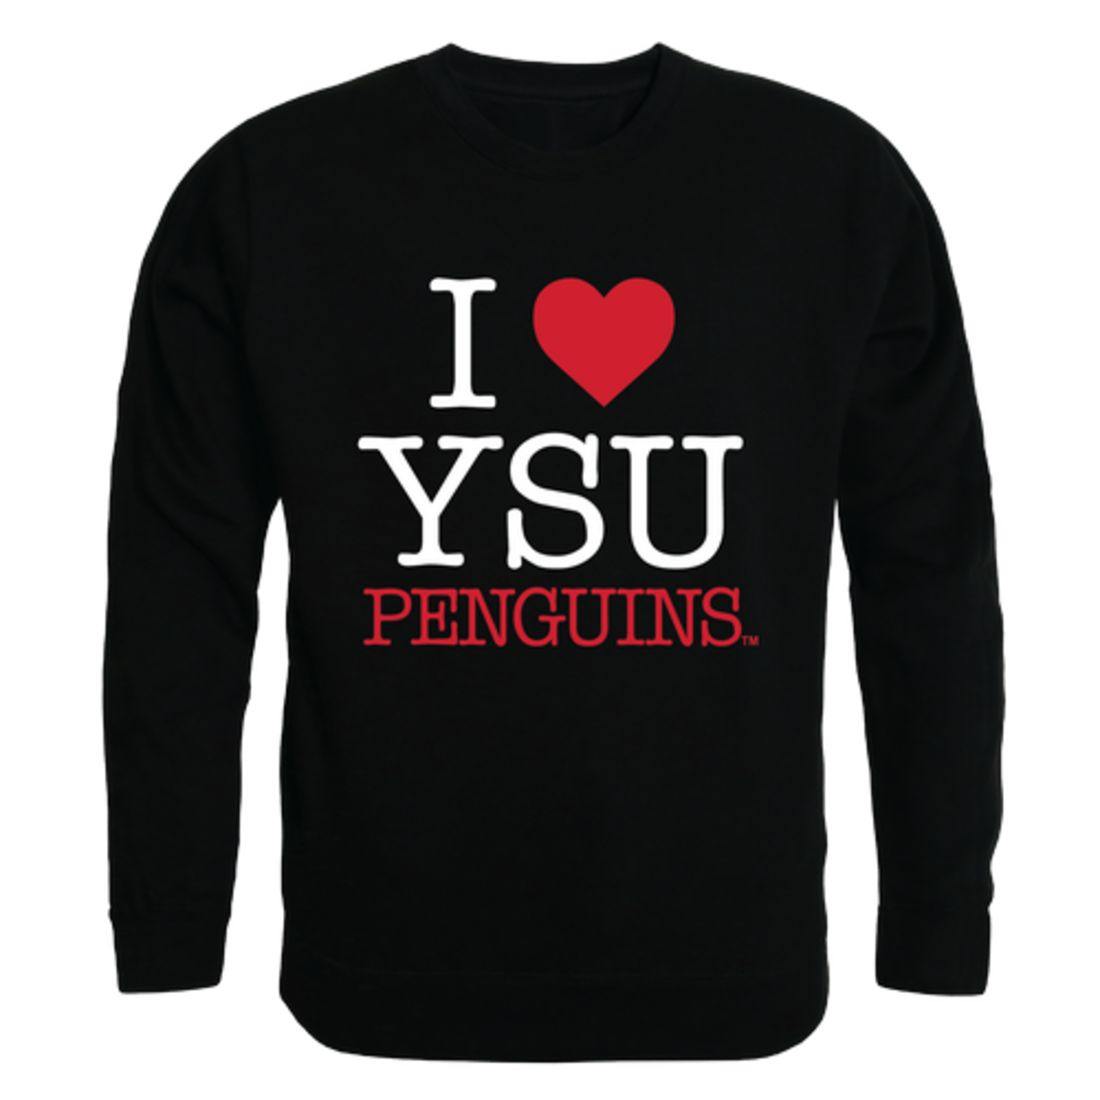 I Love YSU Youngstown State University Penguins Crewneck Pullover Sweatshirt Sweater-Campus-Wardrobe